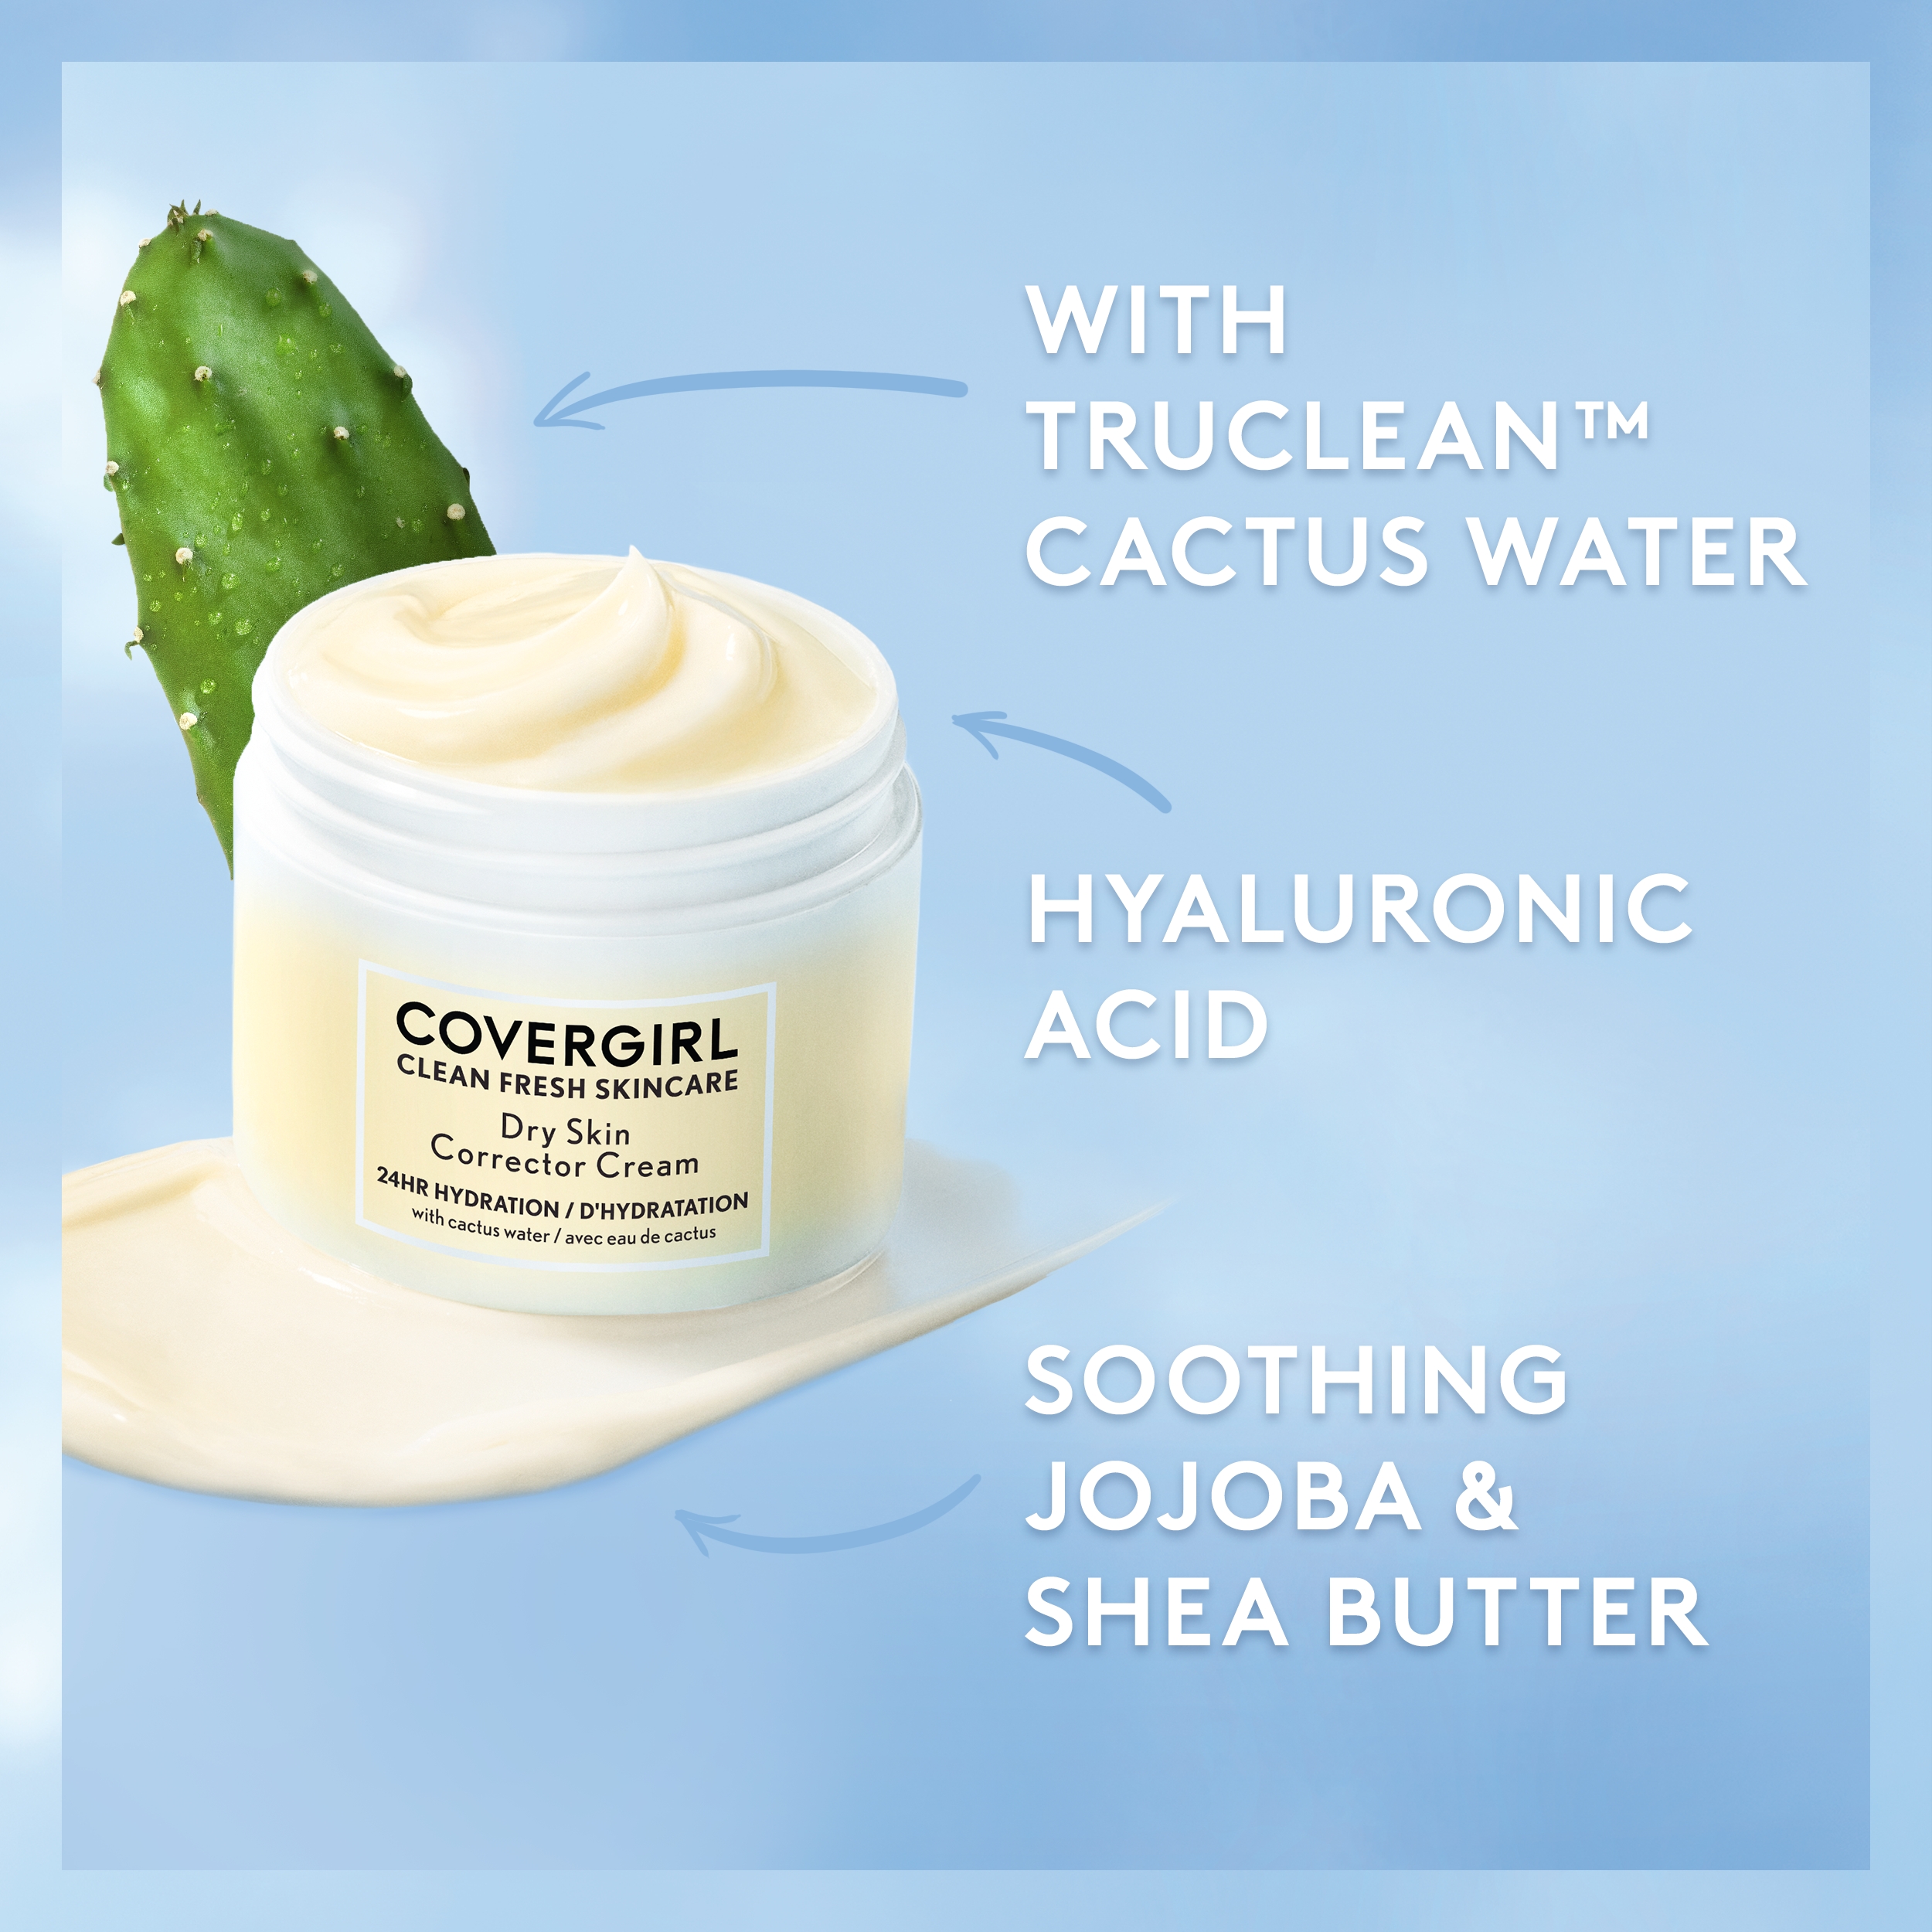 COVERGIRL Clean Fresh Skincare Dry Skin Corrector Face Cream, 2.0 fl oz - image 5 of 11